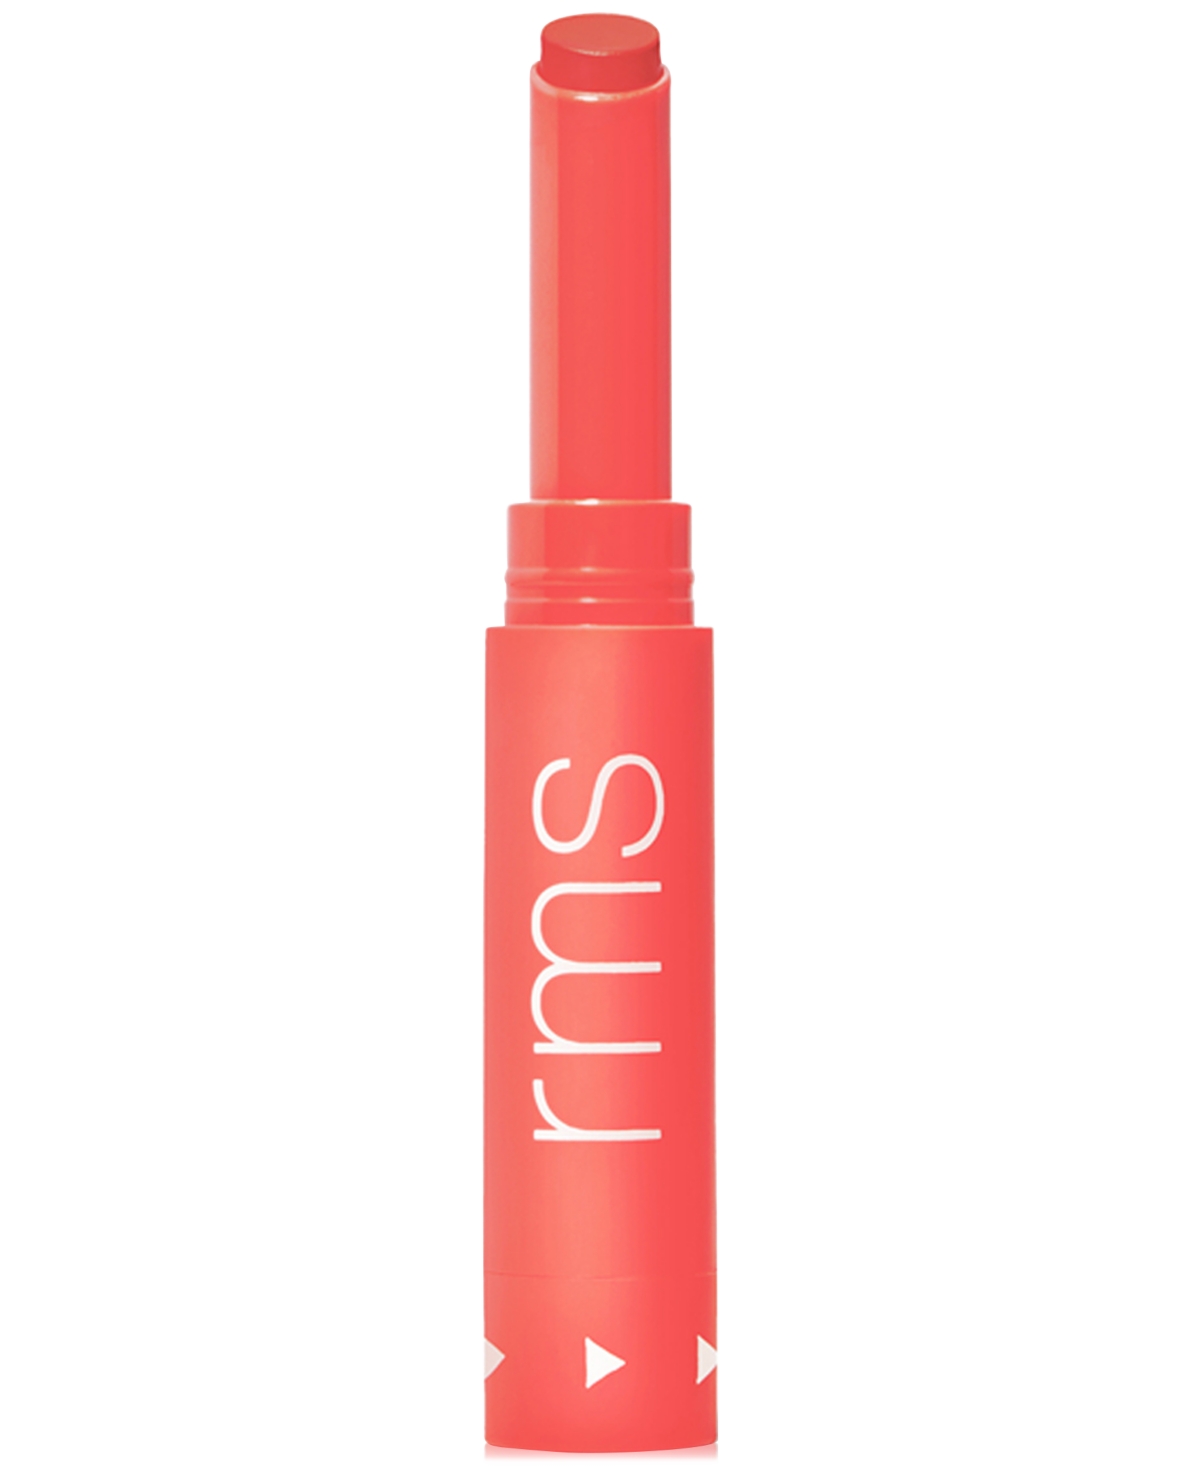 Rms Beauty Legendary Serum Lipstick In Ruby Moon